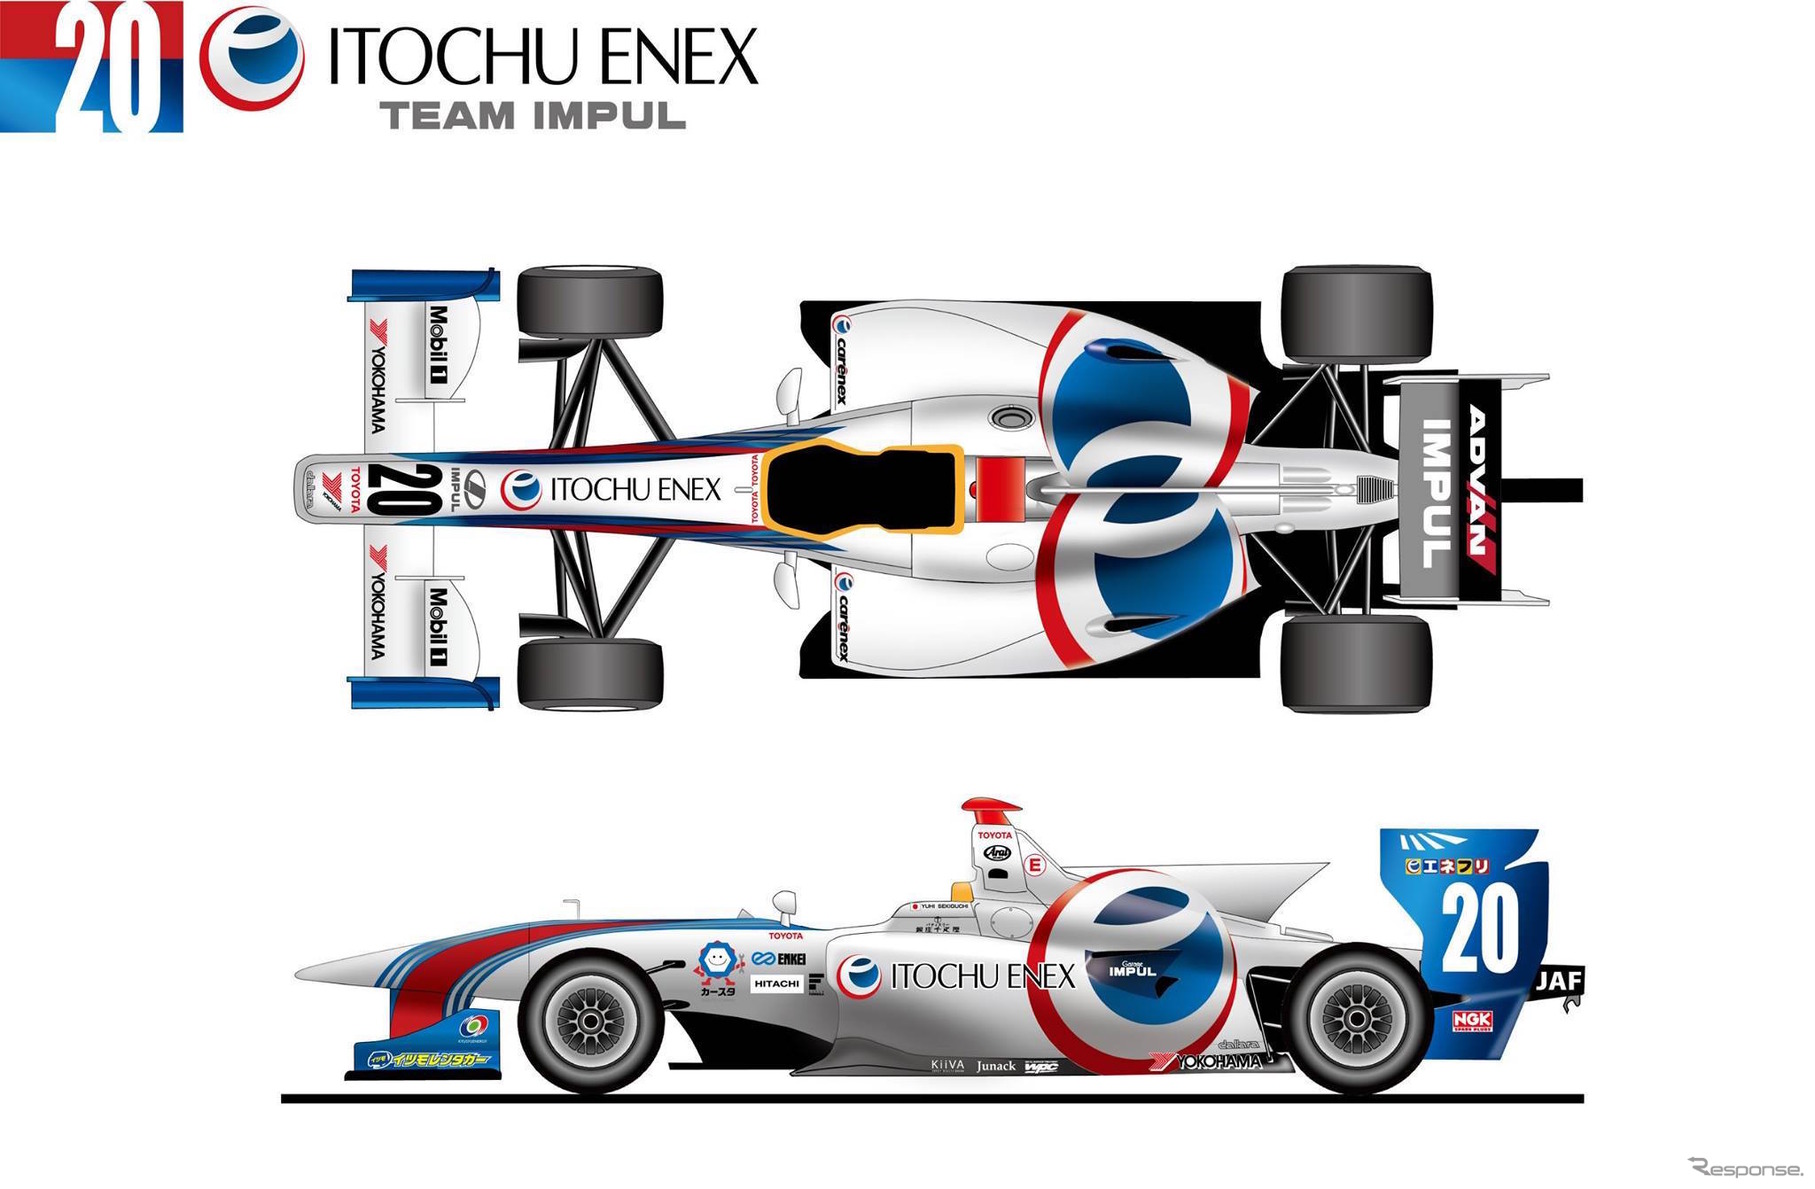 「ITOCHU ENEX TEAM IMPUL」のマシンカラーリング（20号車）。